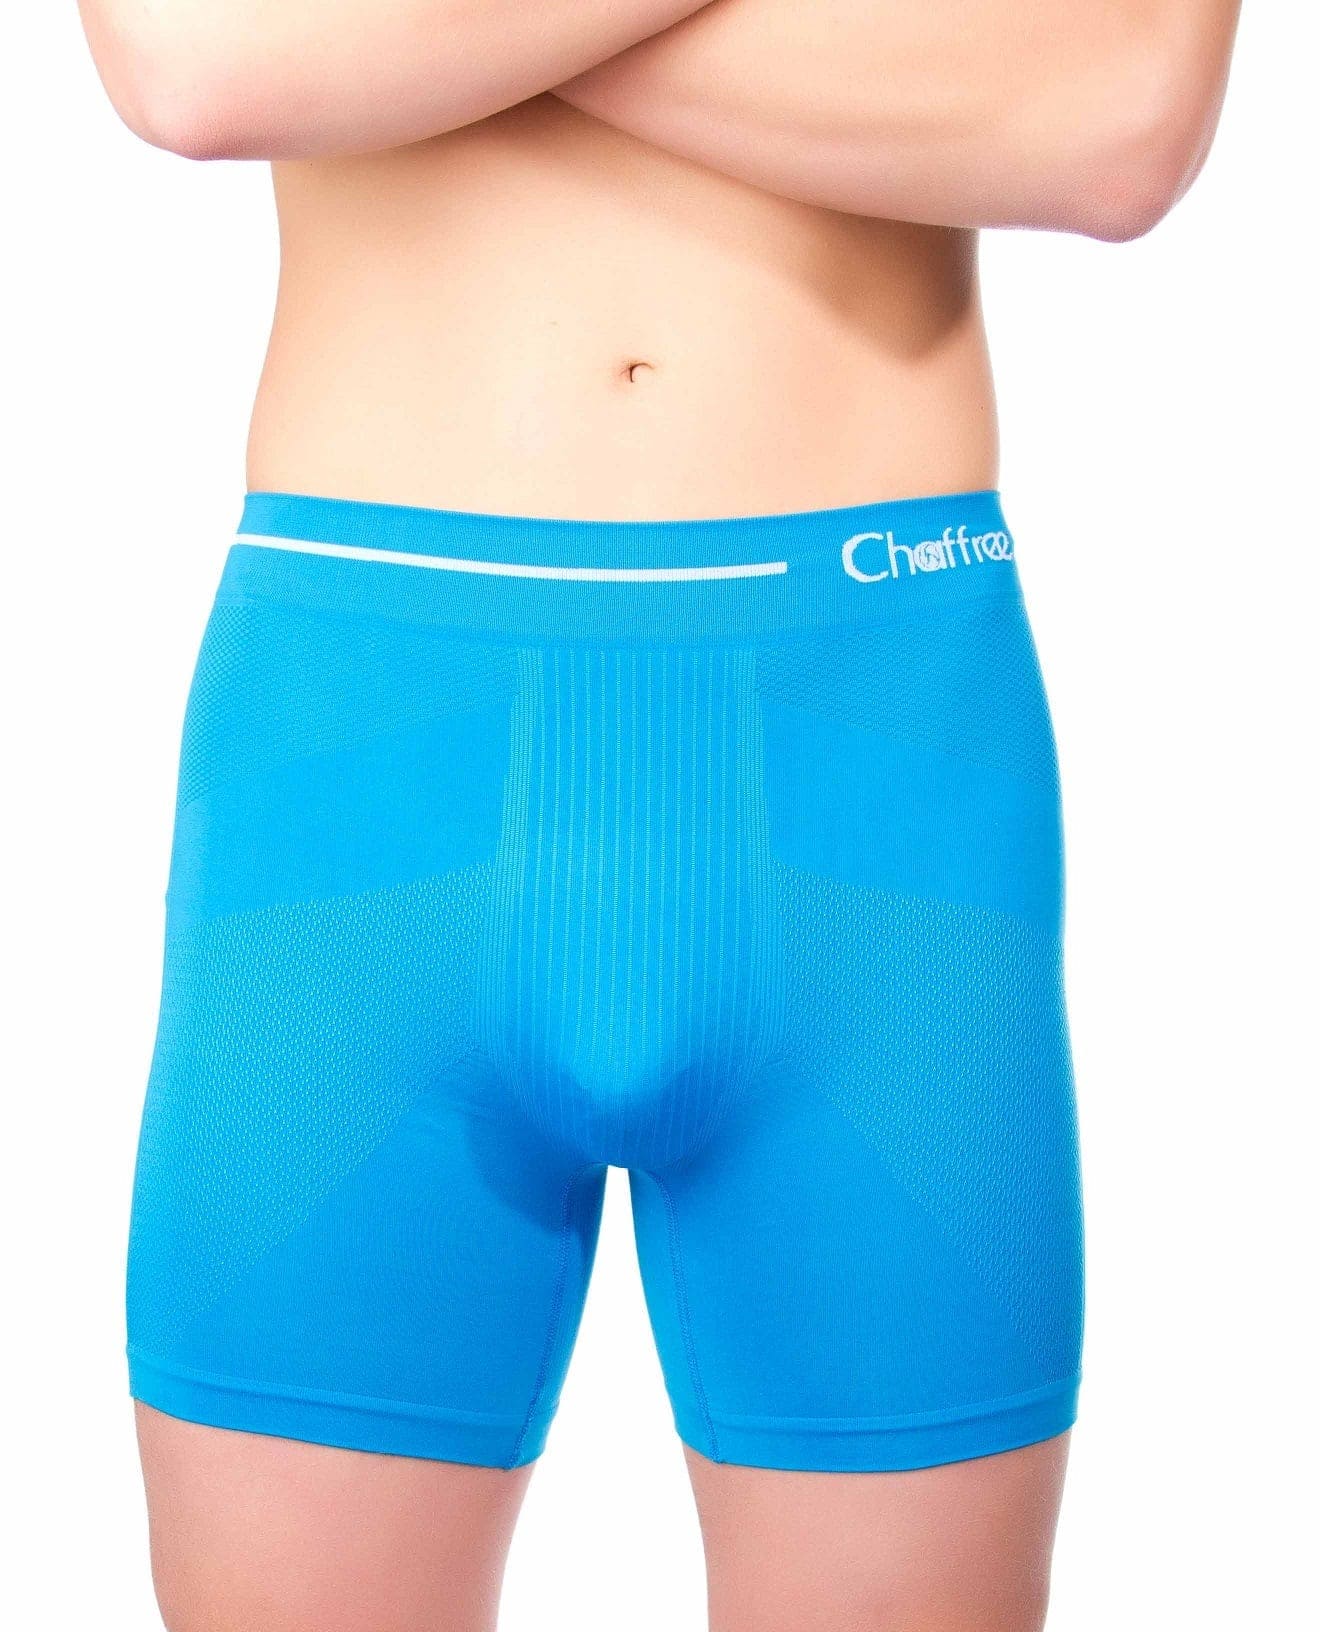 Men's Underwear Trunks Sale Clearance Cotton Stretch Regular Leg Boxer  Shorts Open Fly Underpants Anti Chafing Underwear for Men